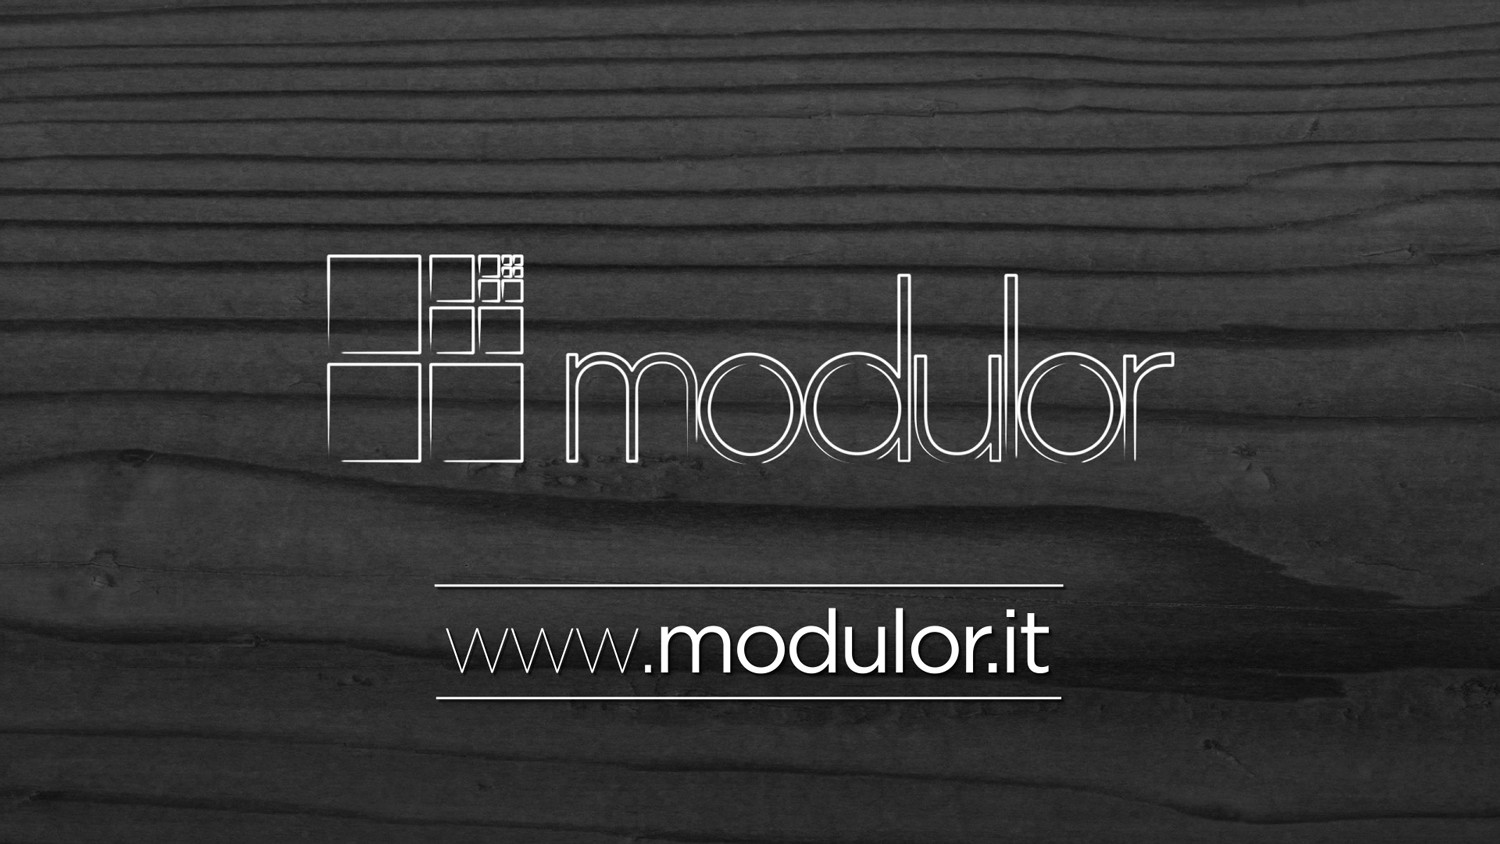 Modulor – We are